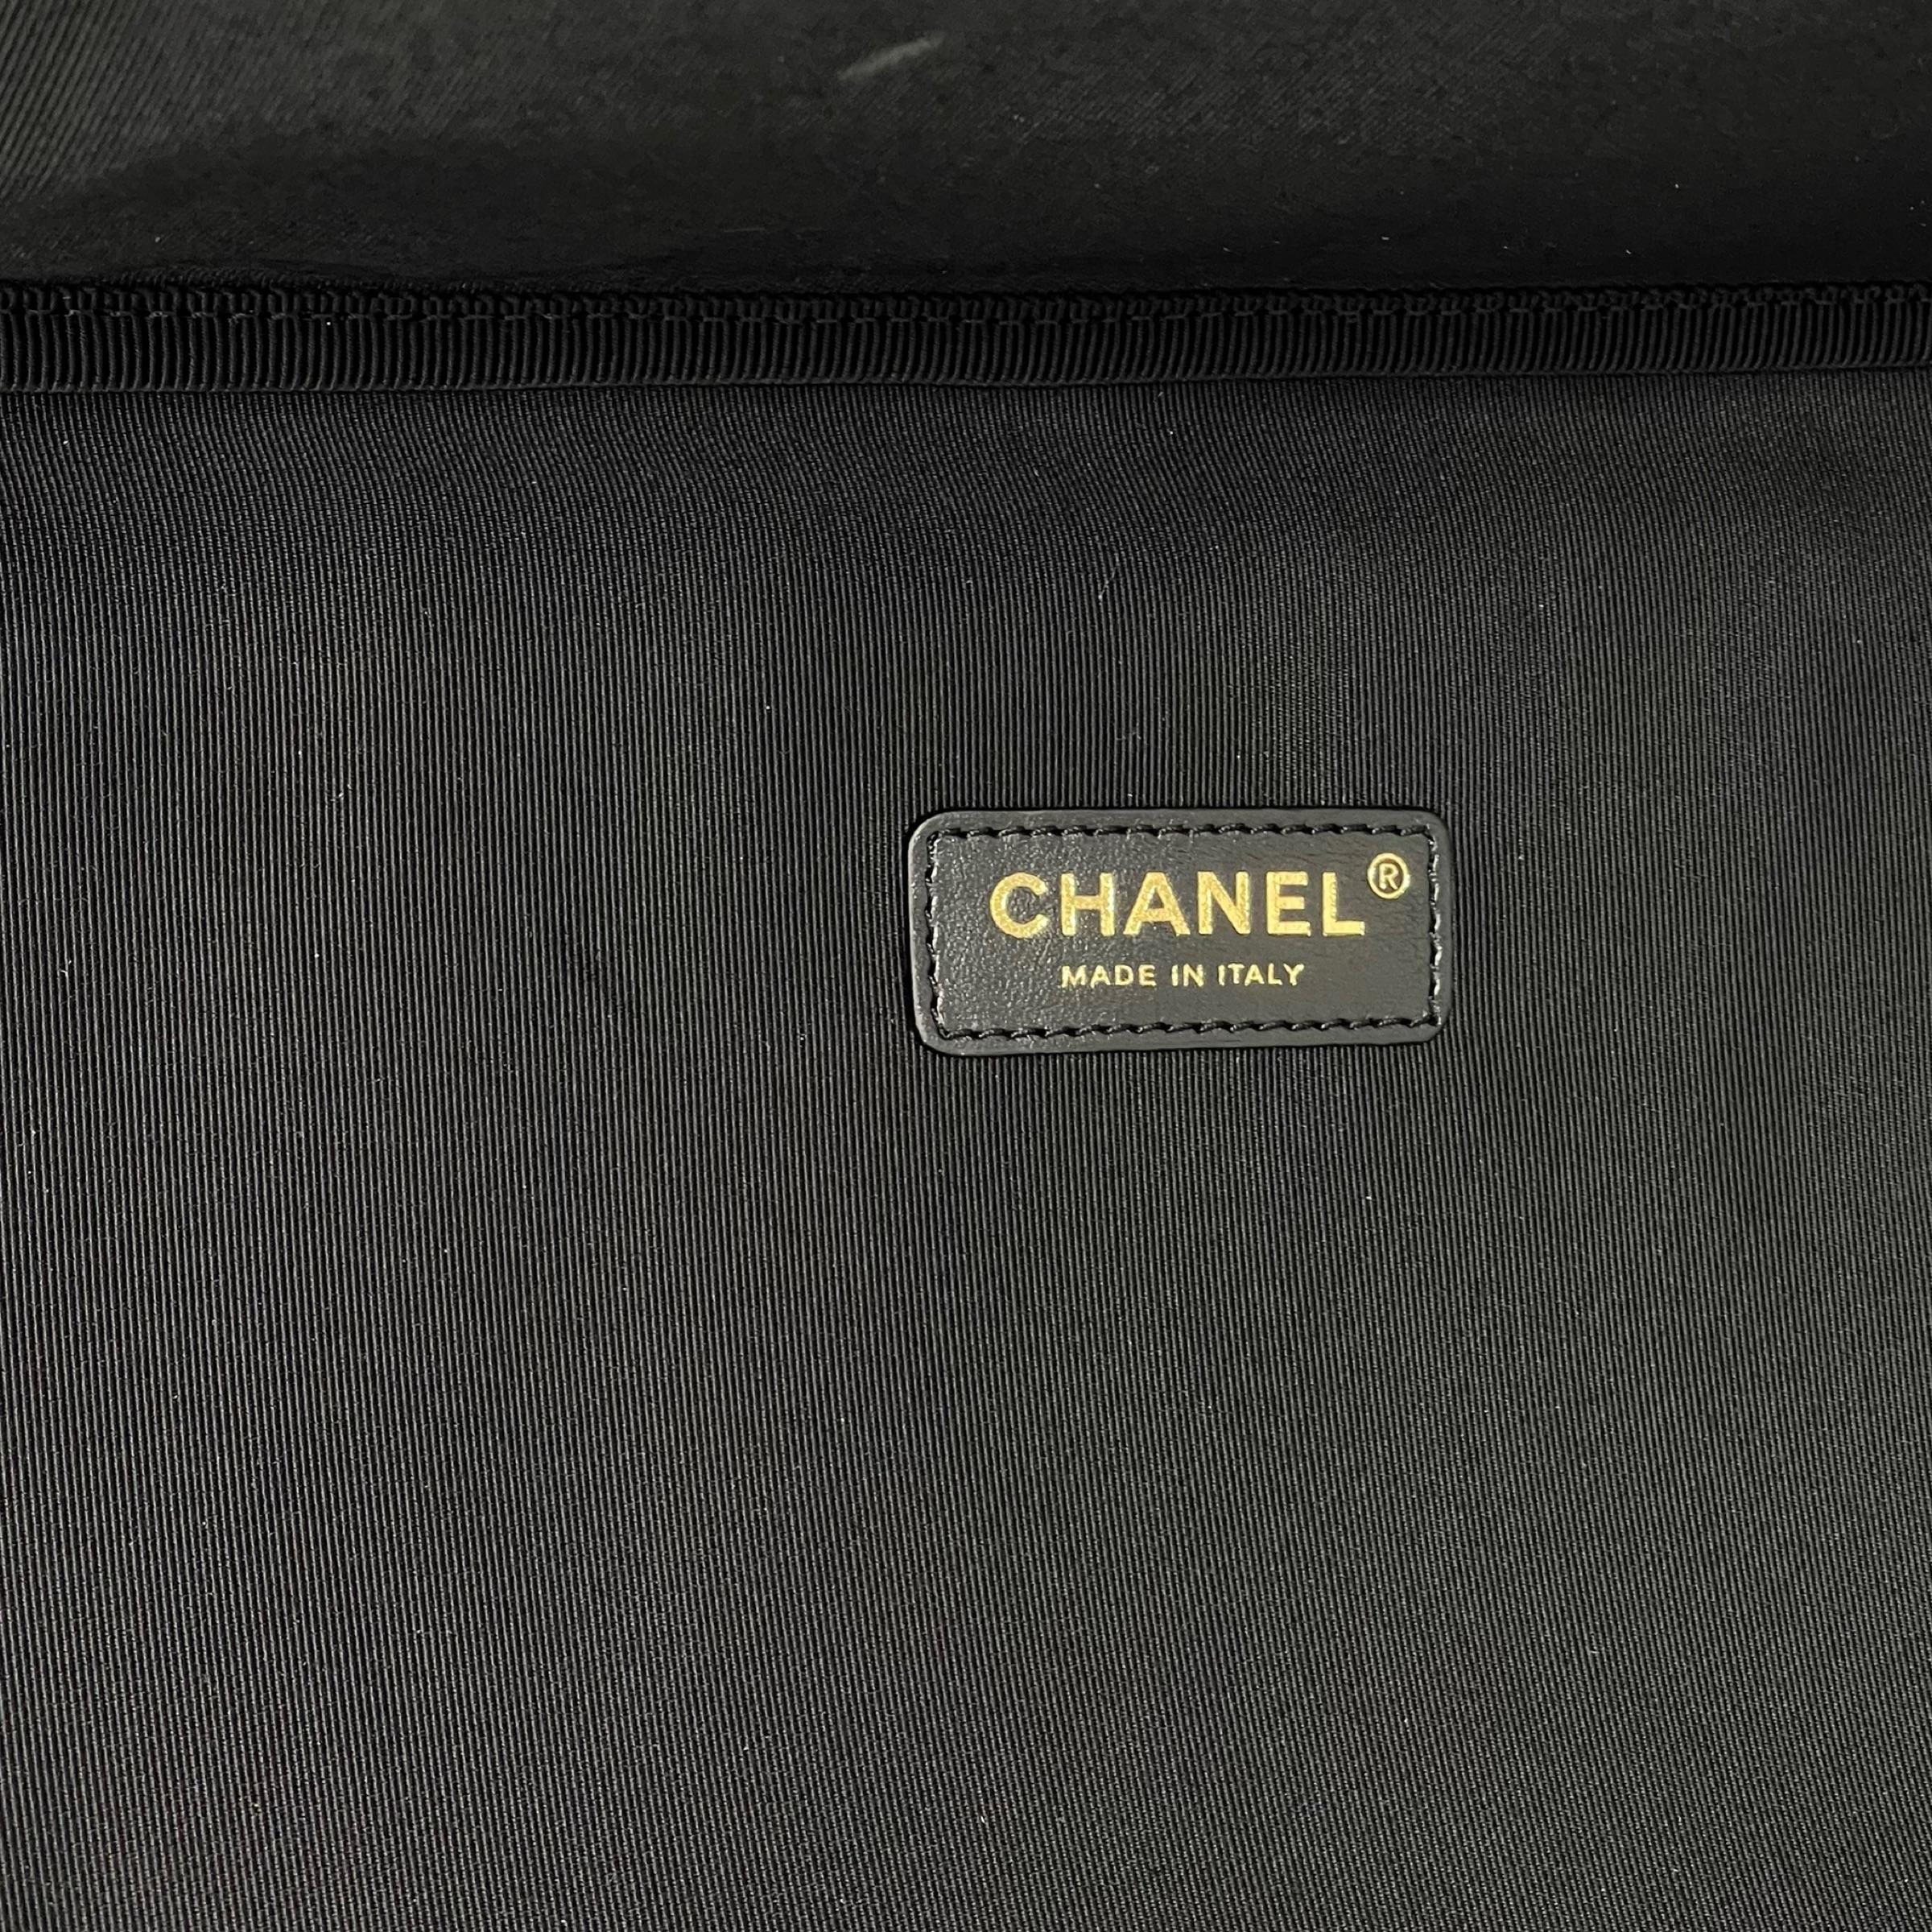 NEW Chanel Black Nylon Large Travel Bag Gold-Tone Hardware Tote Duffle Bag 2022 For Sale 12